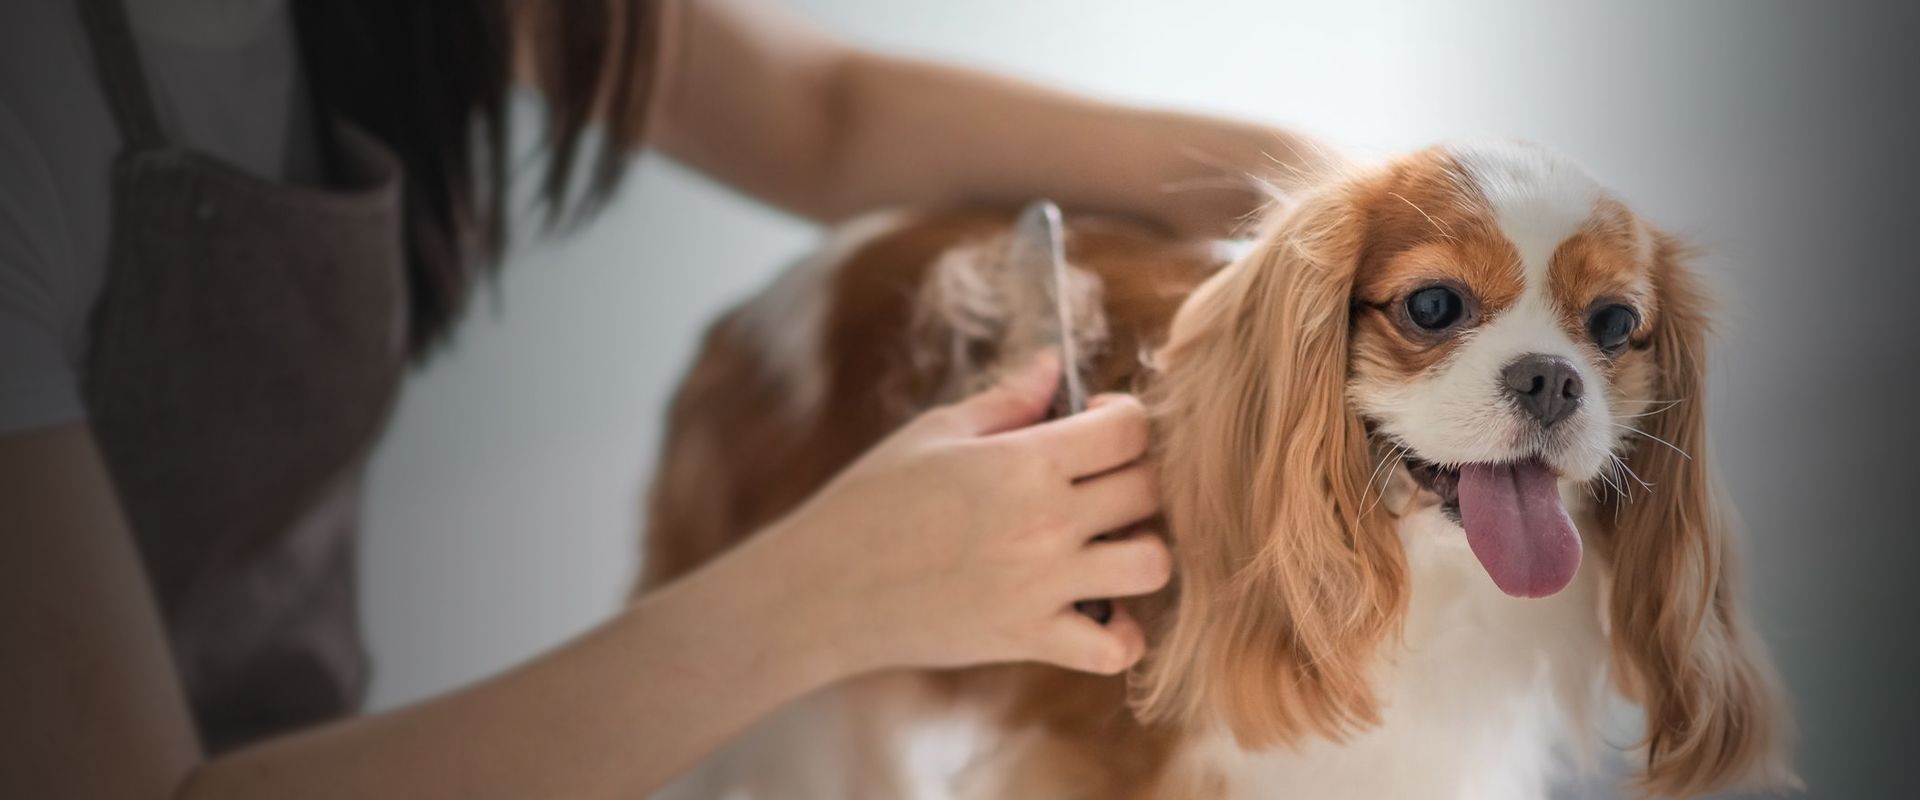 pet groomer brushing a dog